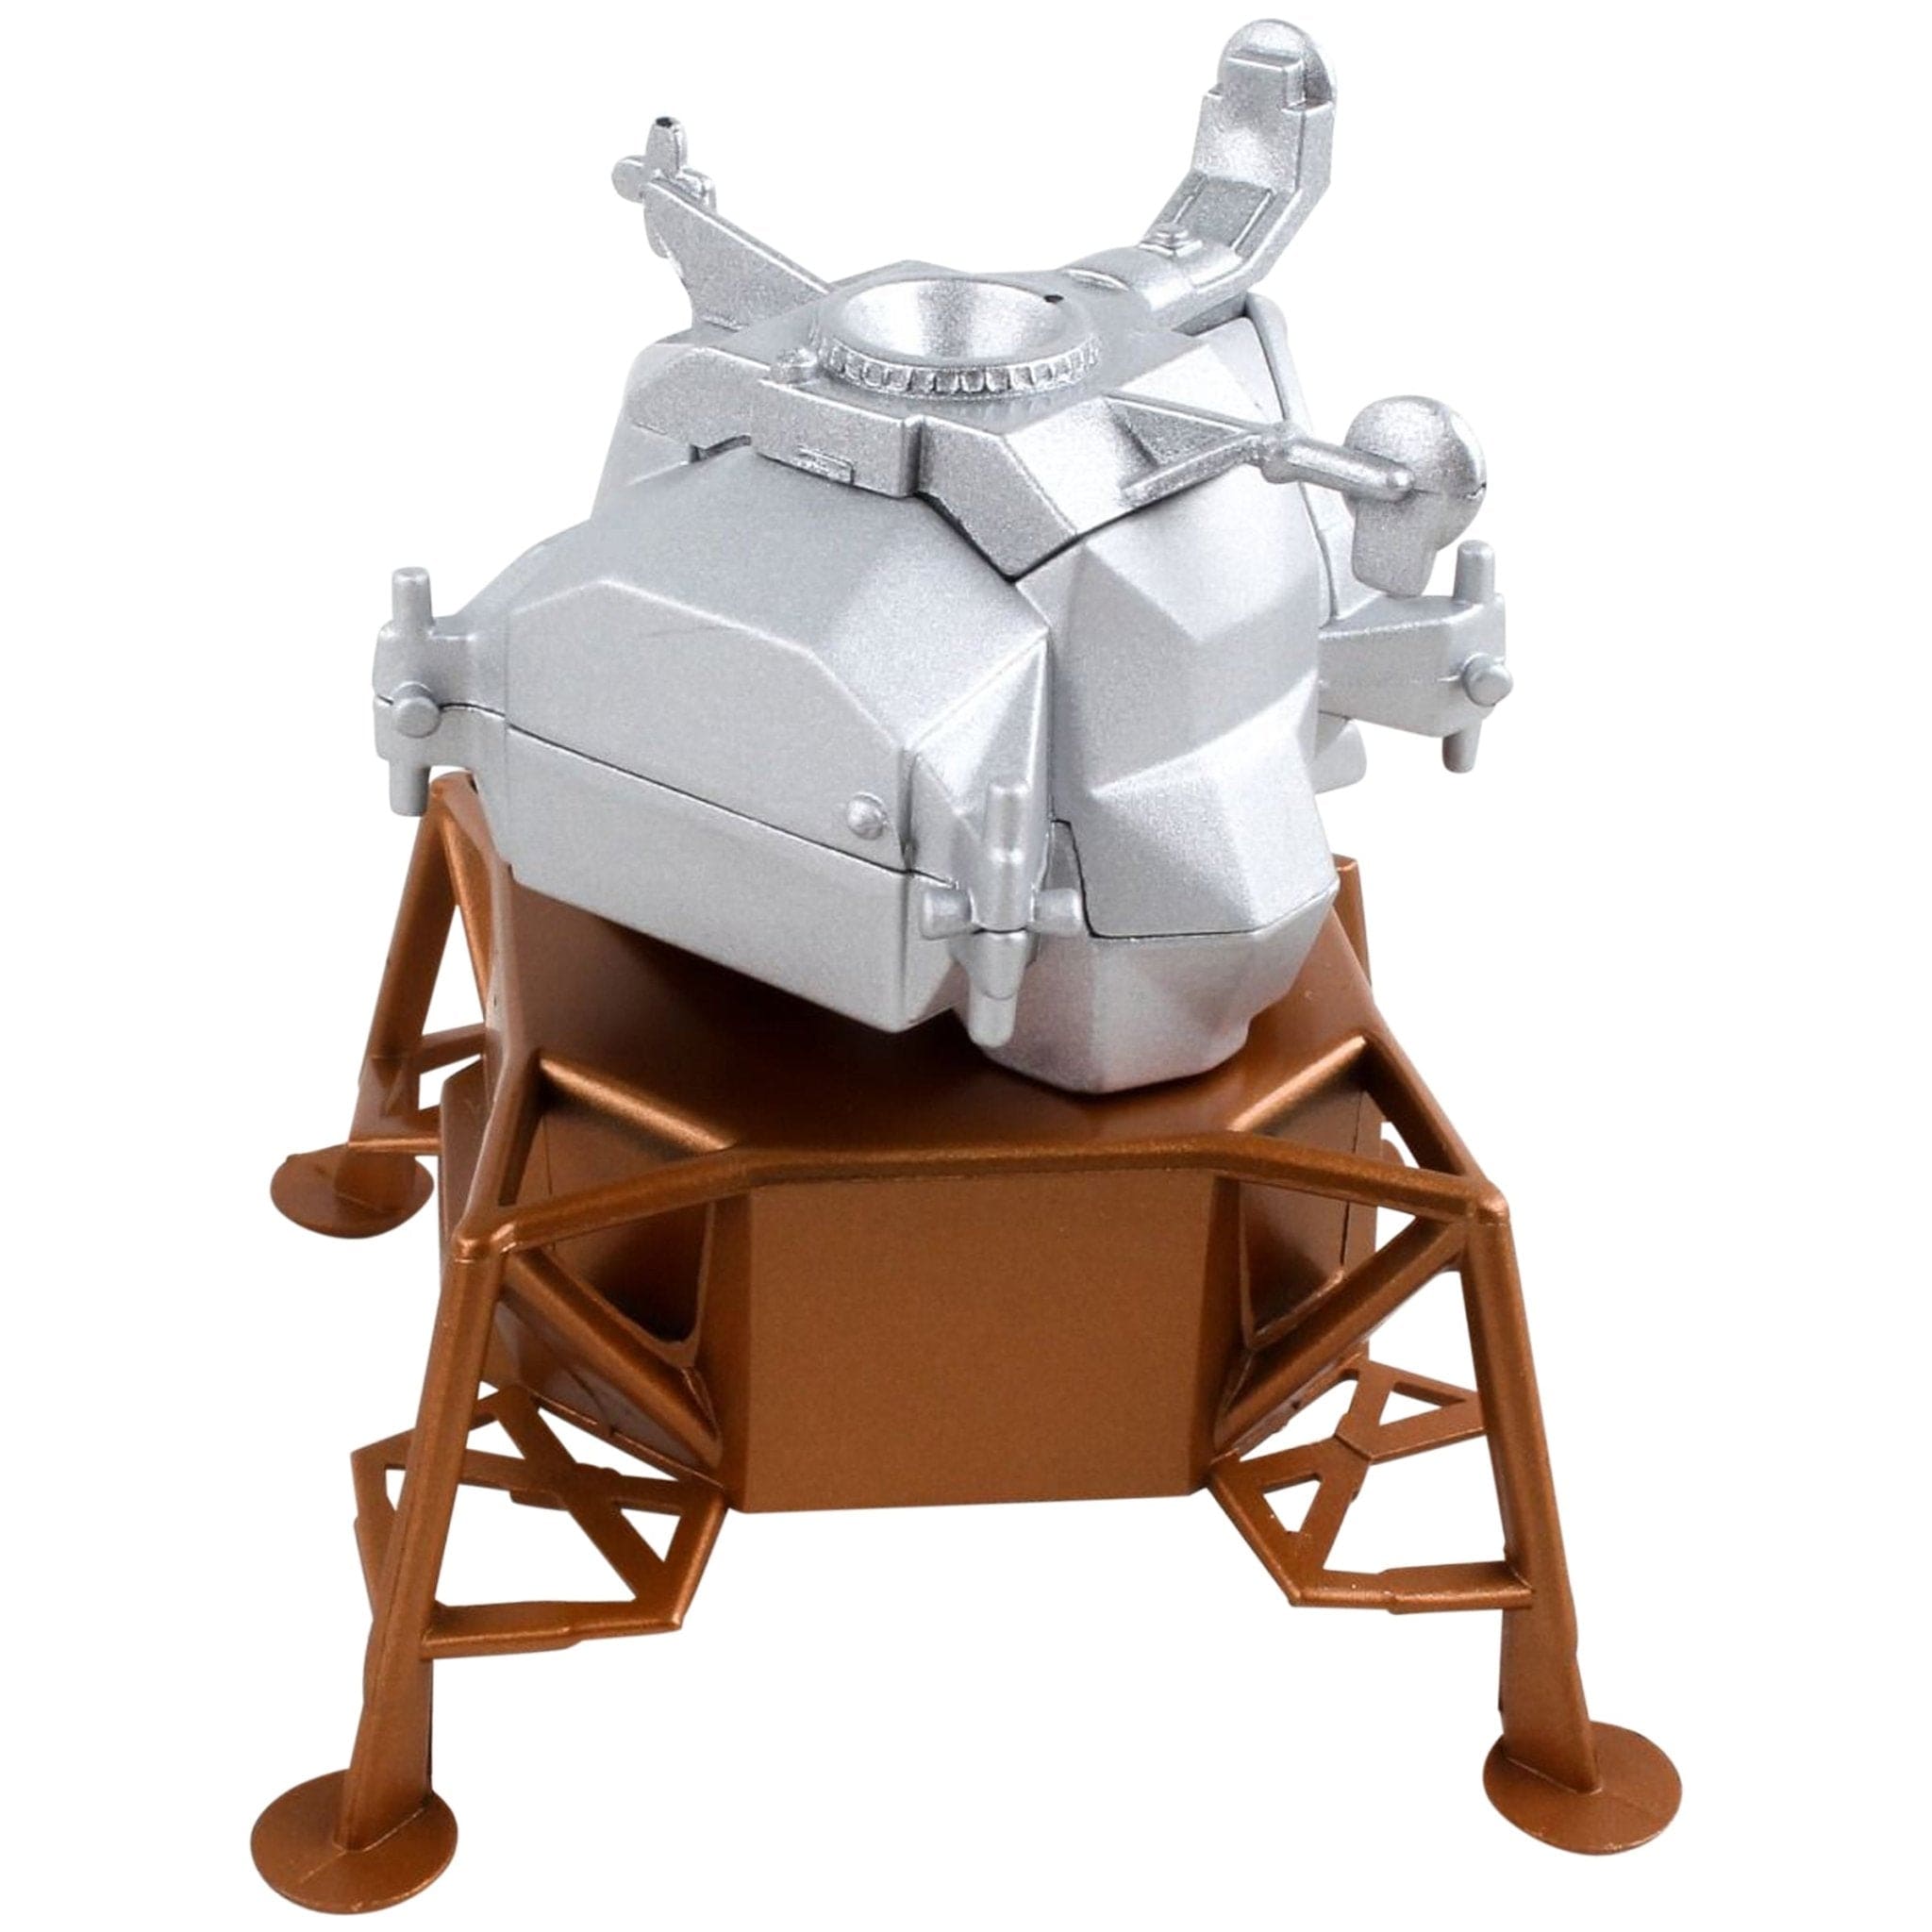 Corgi Lunar Module Smithsonian Die-Cast Metal Model Spacecraft